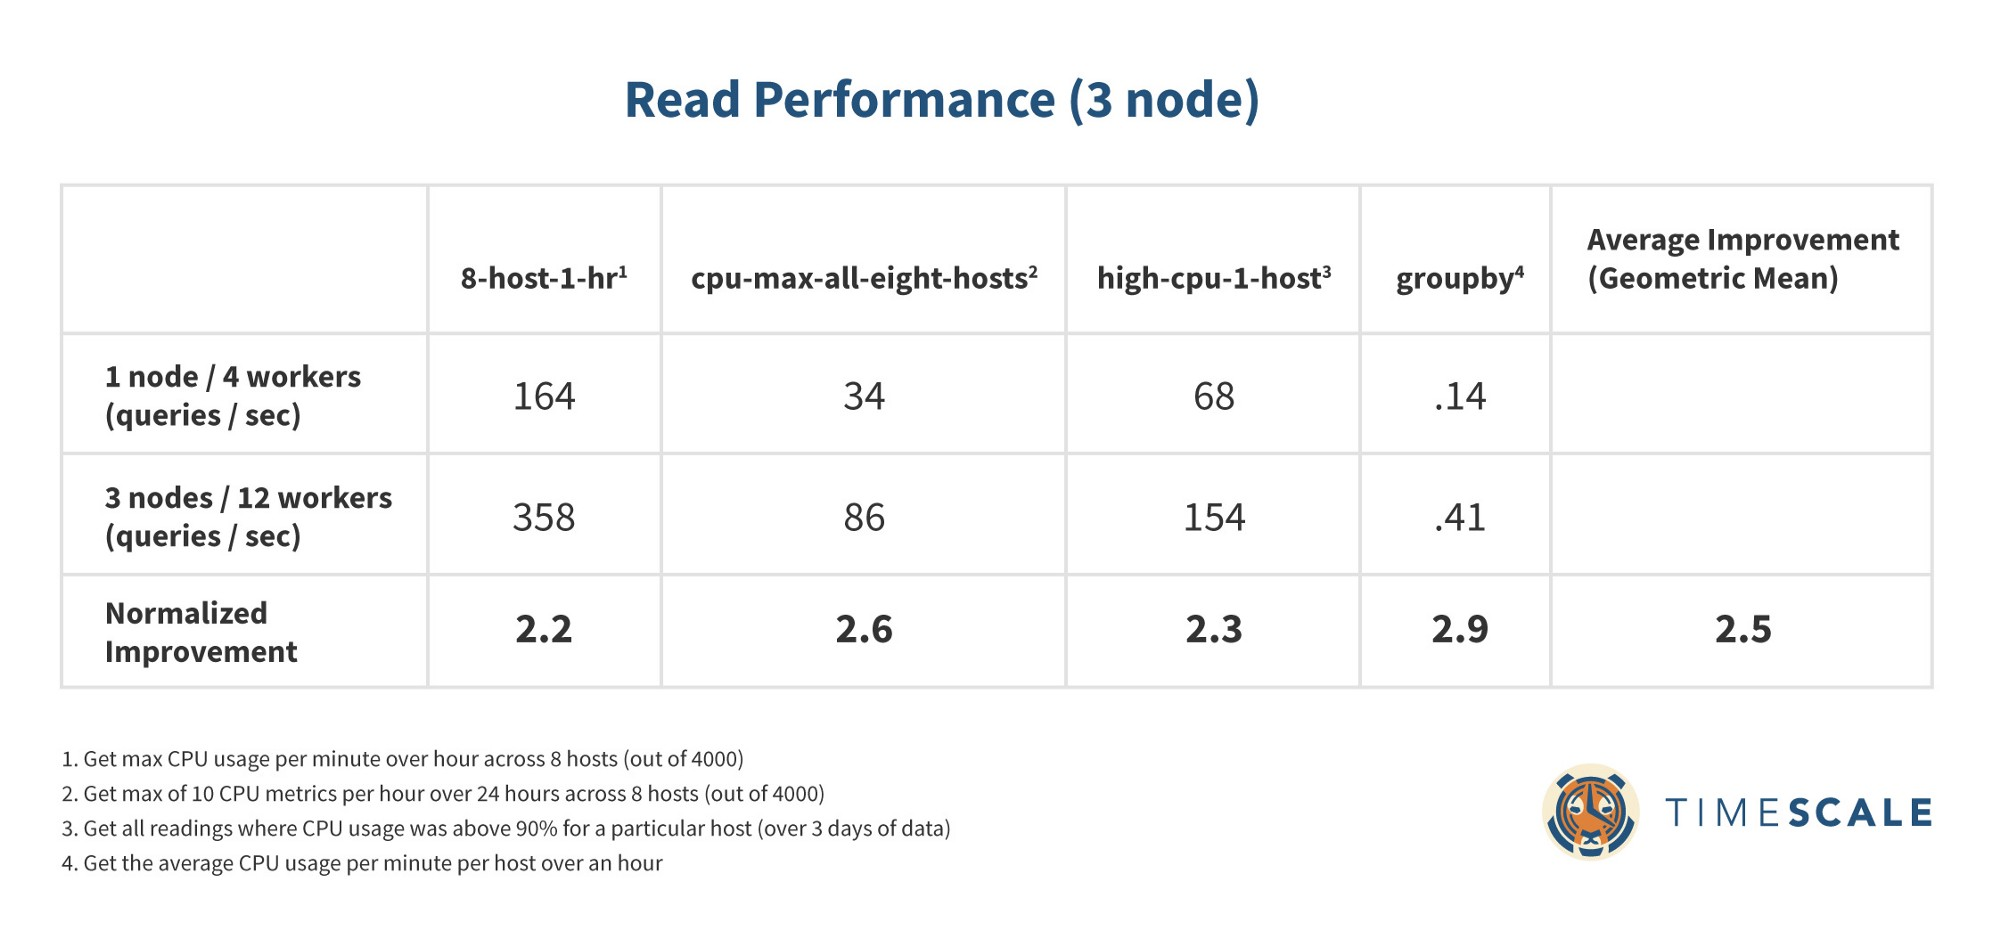 TimescaleDB read performance improvements on a three-node setup.